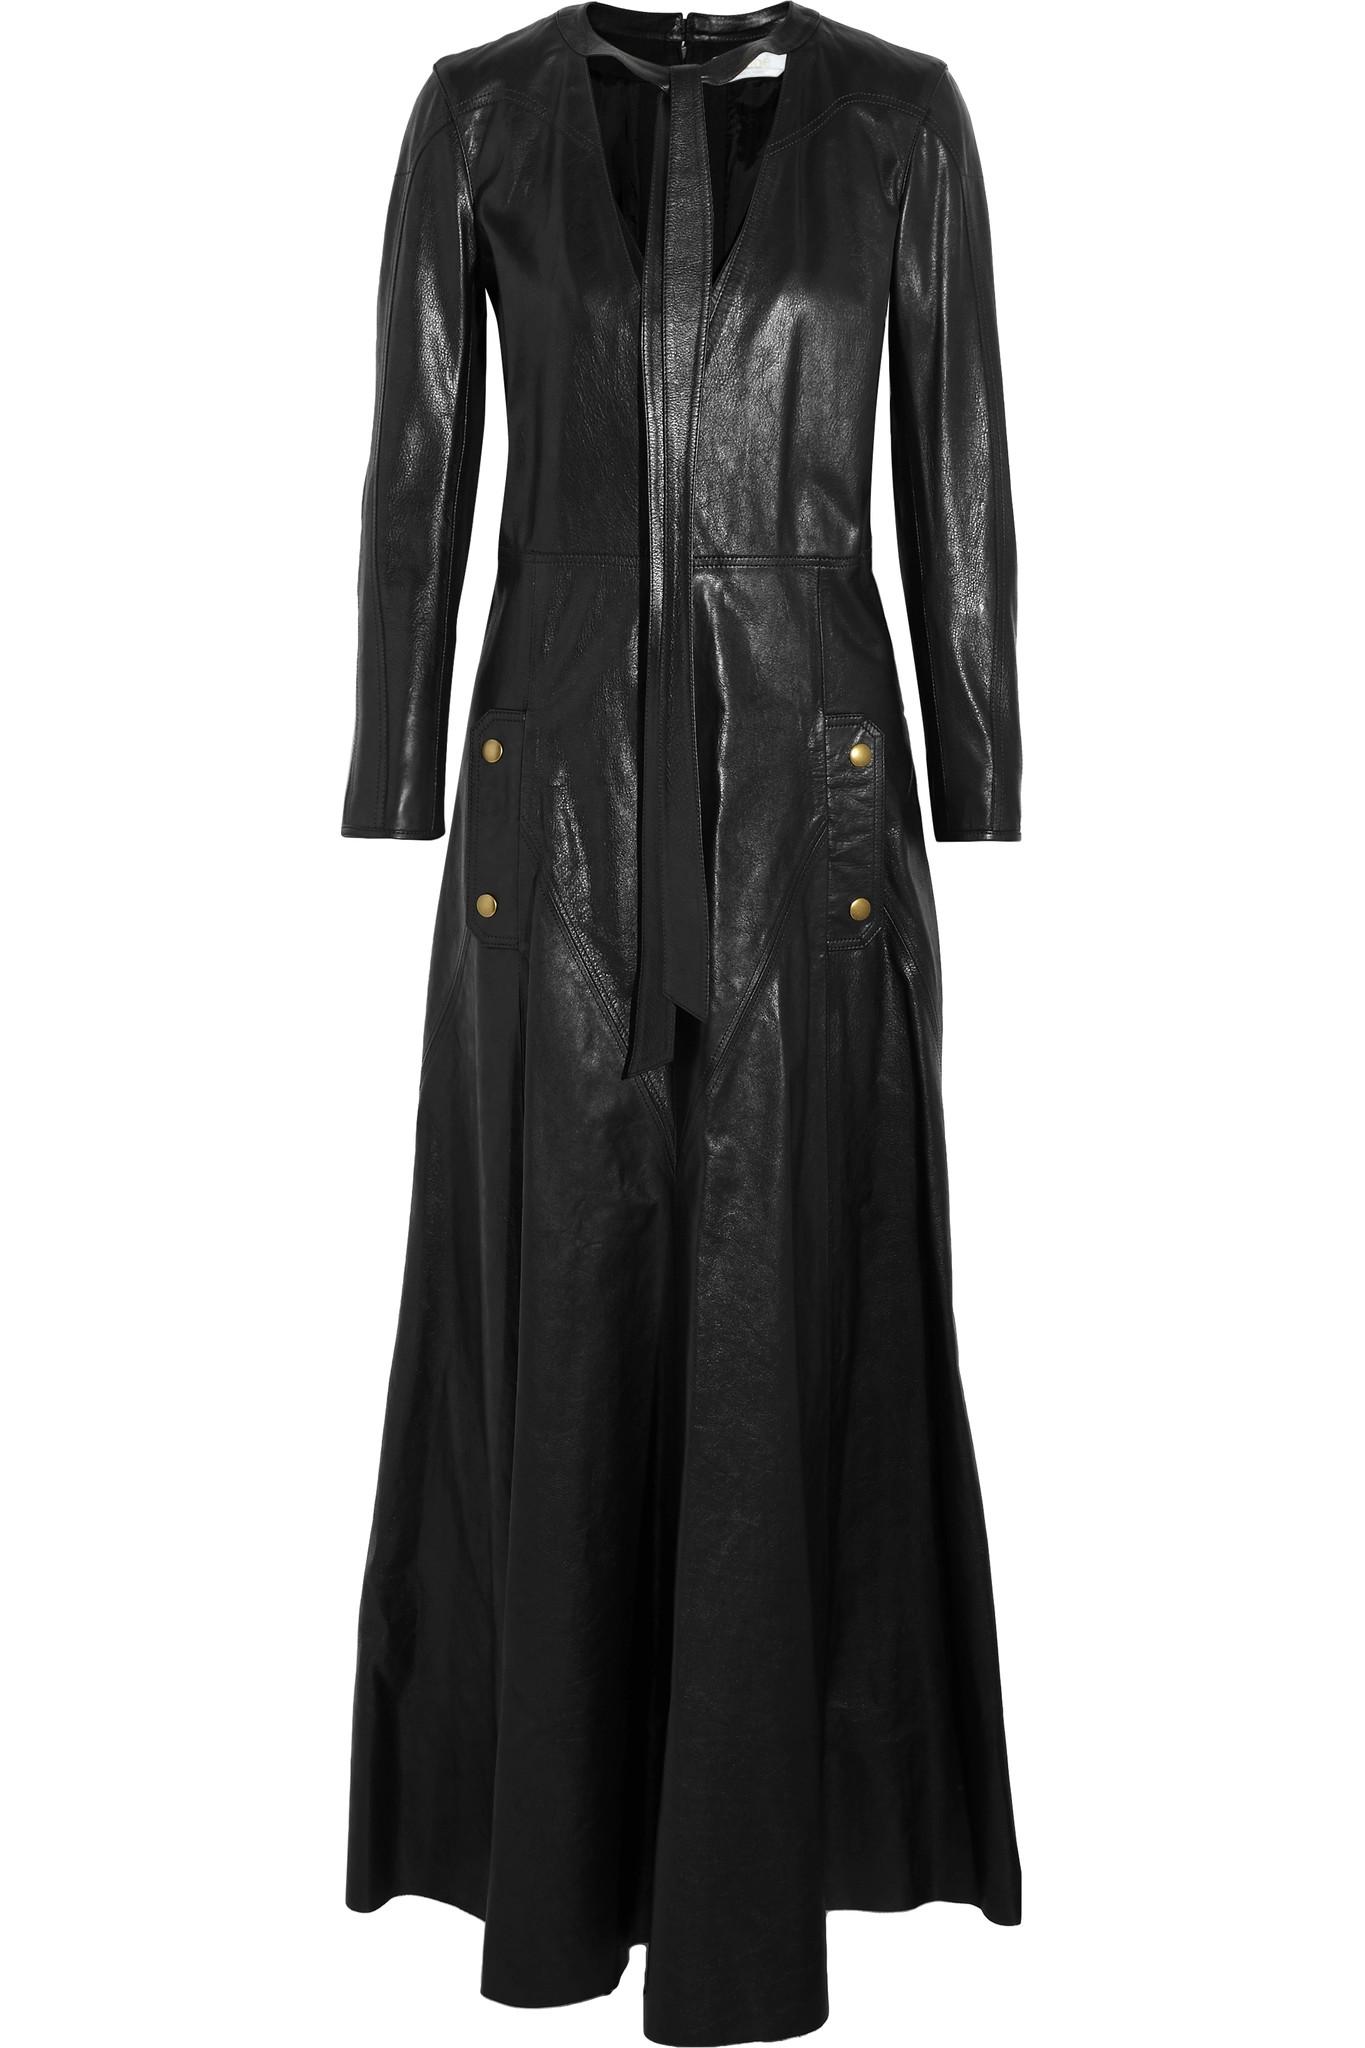 Lyst - Chloé Leather Maxi Dress in Black